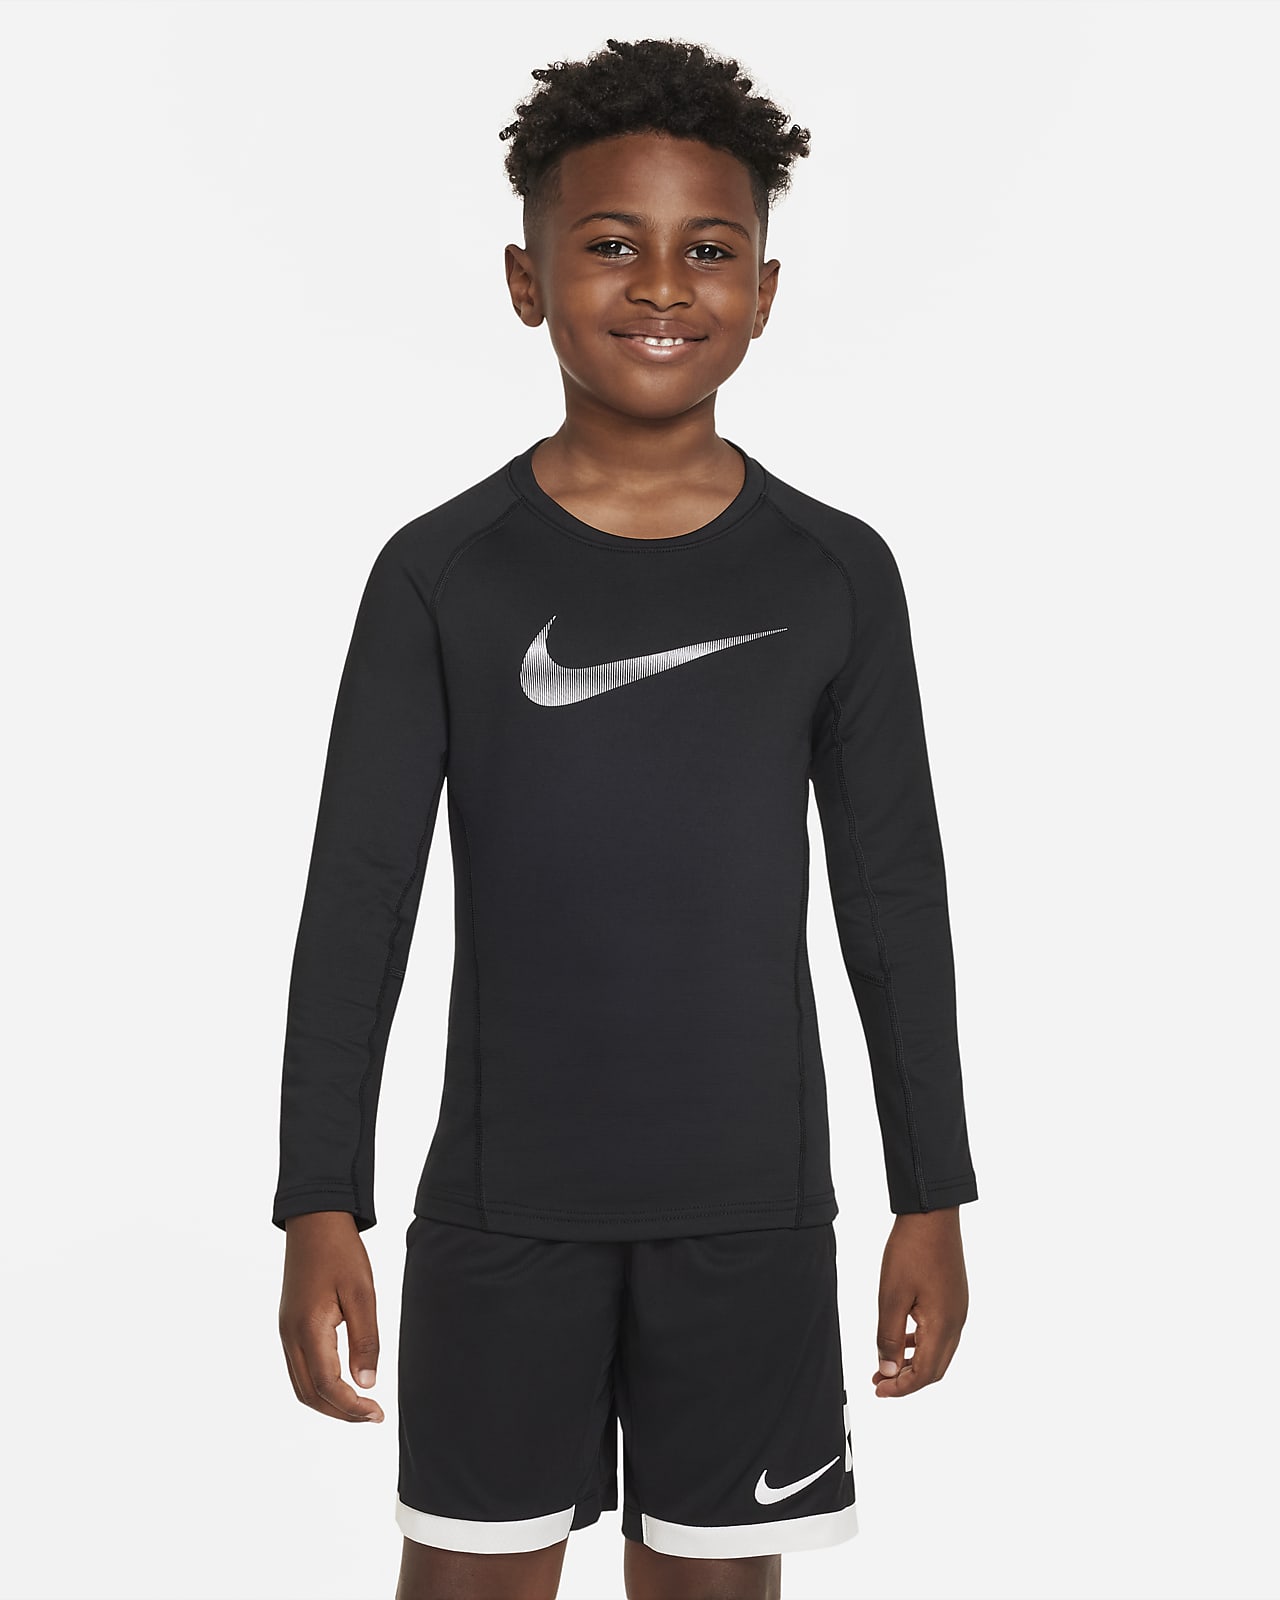 Ilegible complicaciones Andrew Halliday Nike Pro Warm Big Kids' (Boys') Long-Sleeve Top. Nike.com